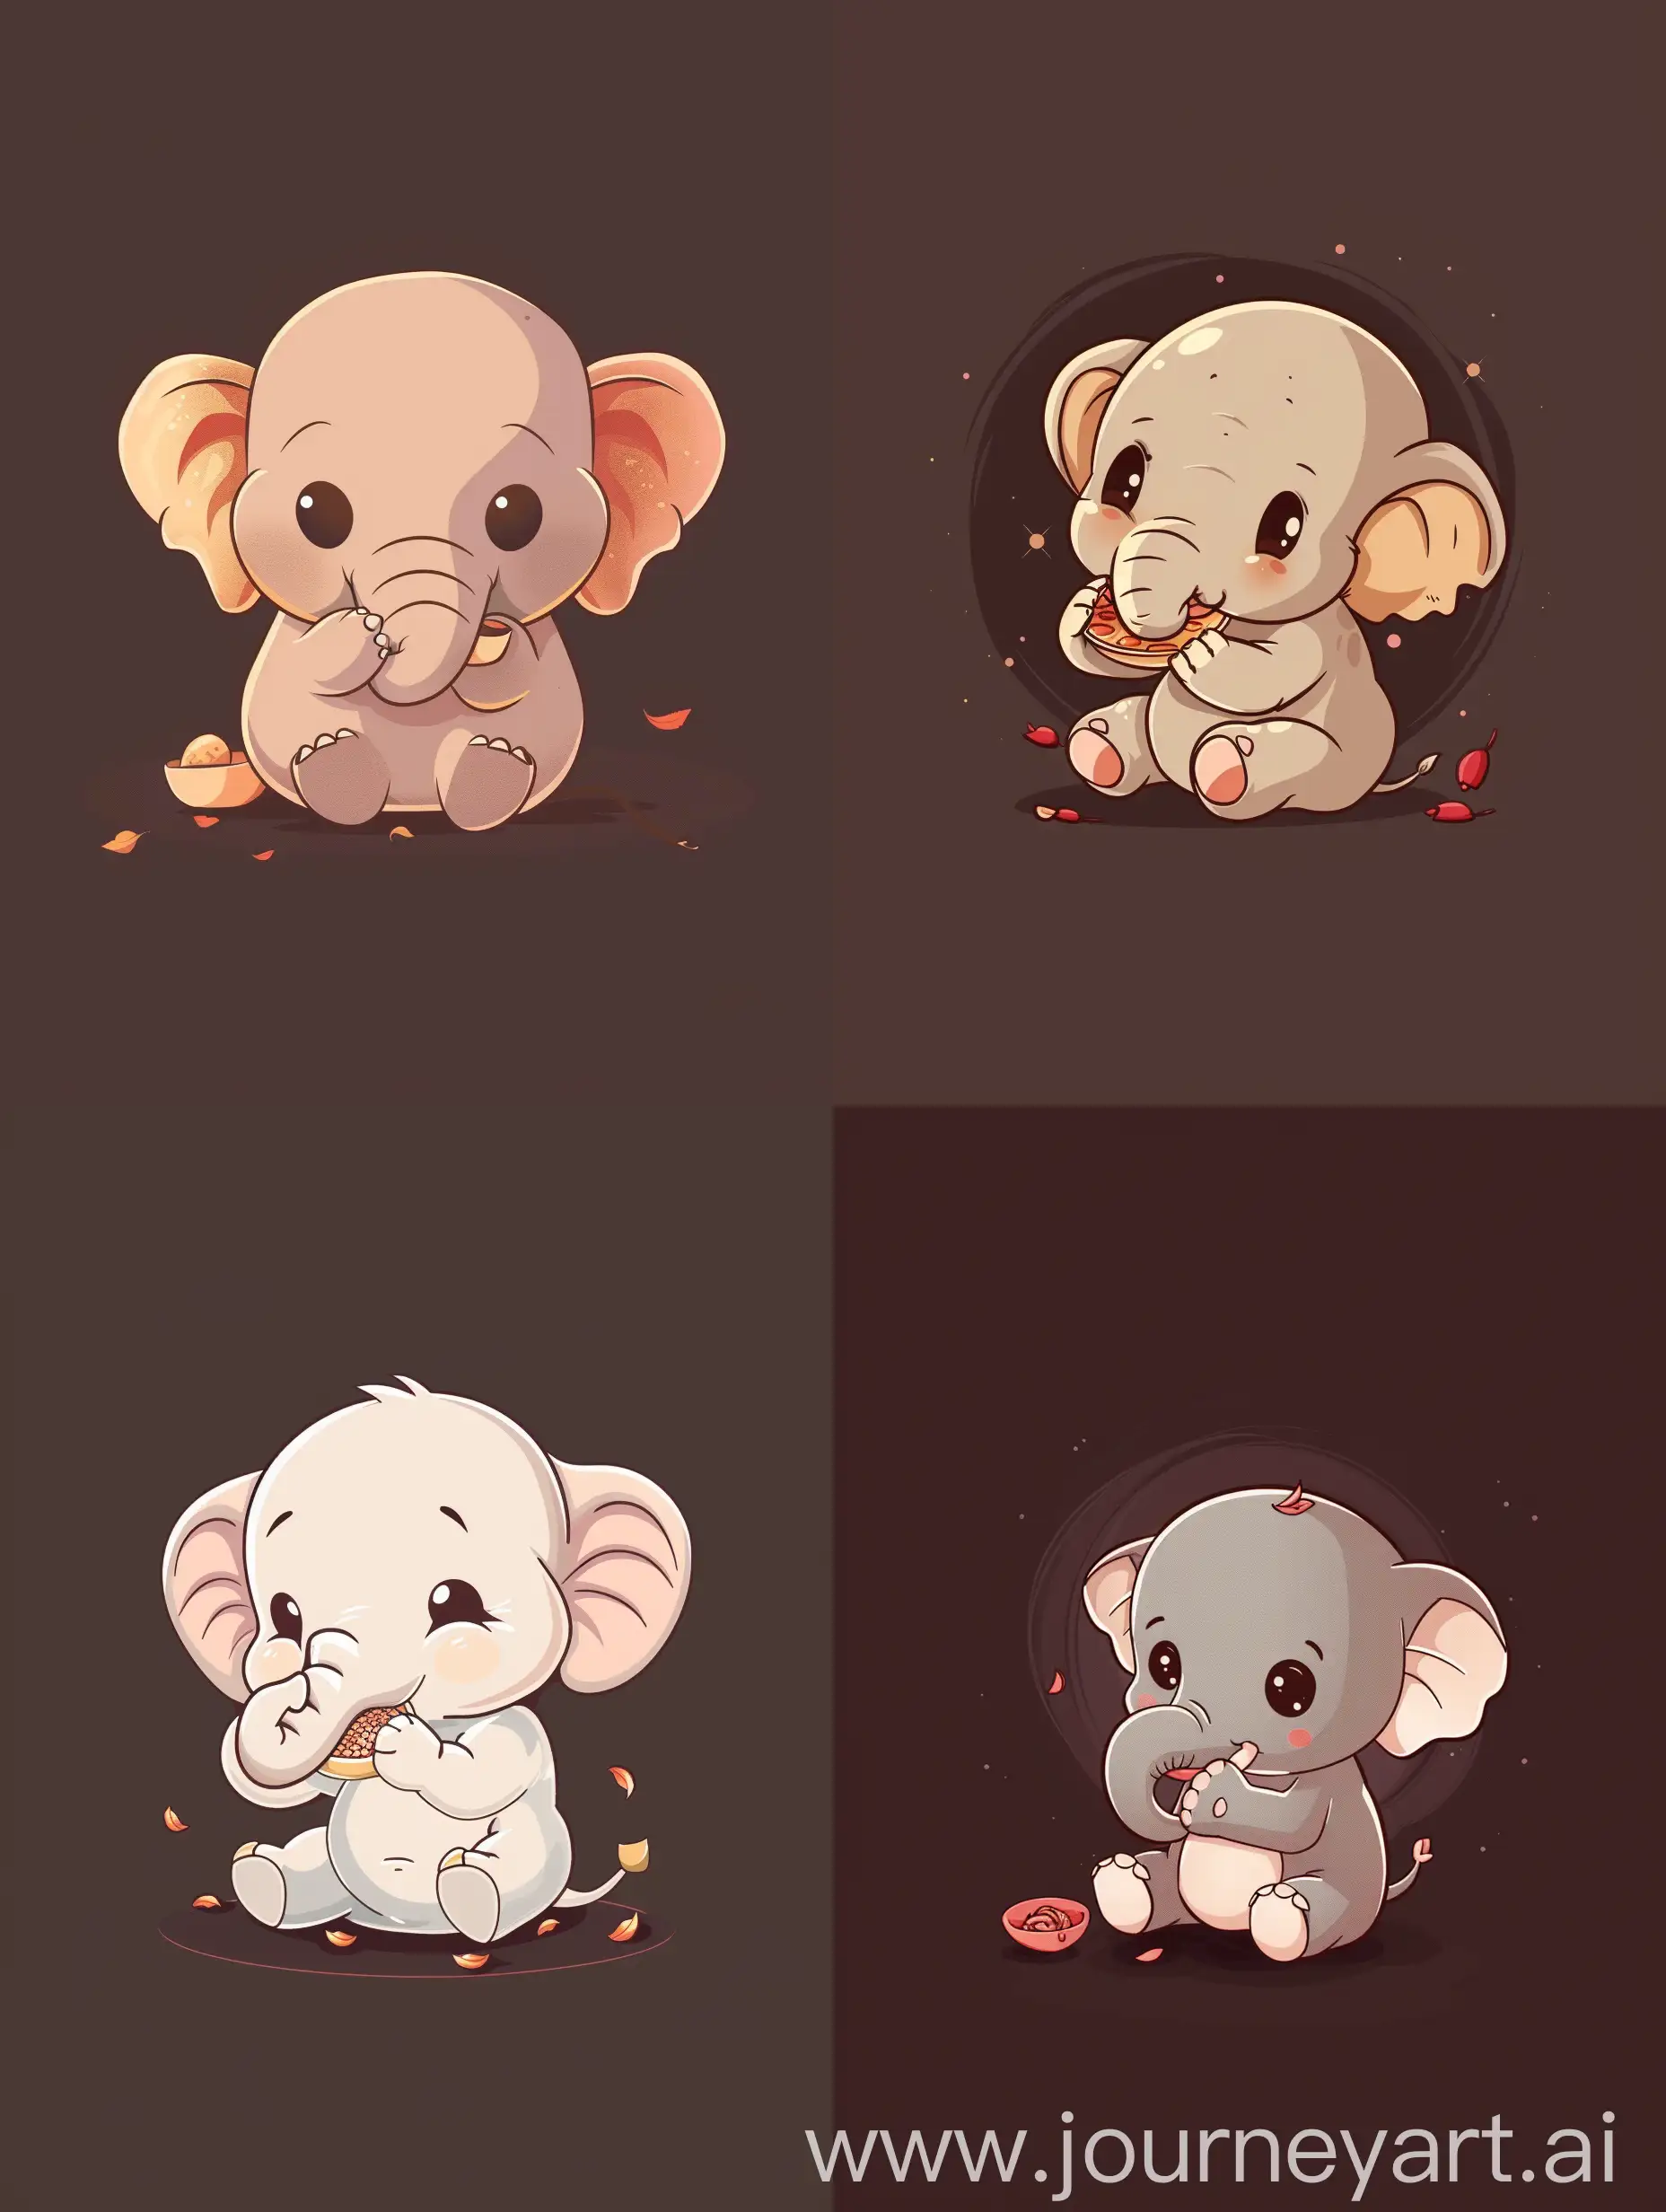 Adorable-Chibi-Elephant-Enjoying-a-Snack-Against-a-Dark-Brown-Background